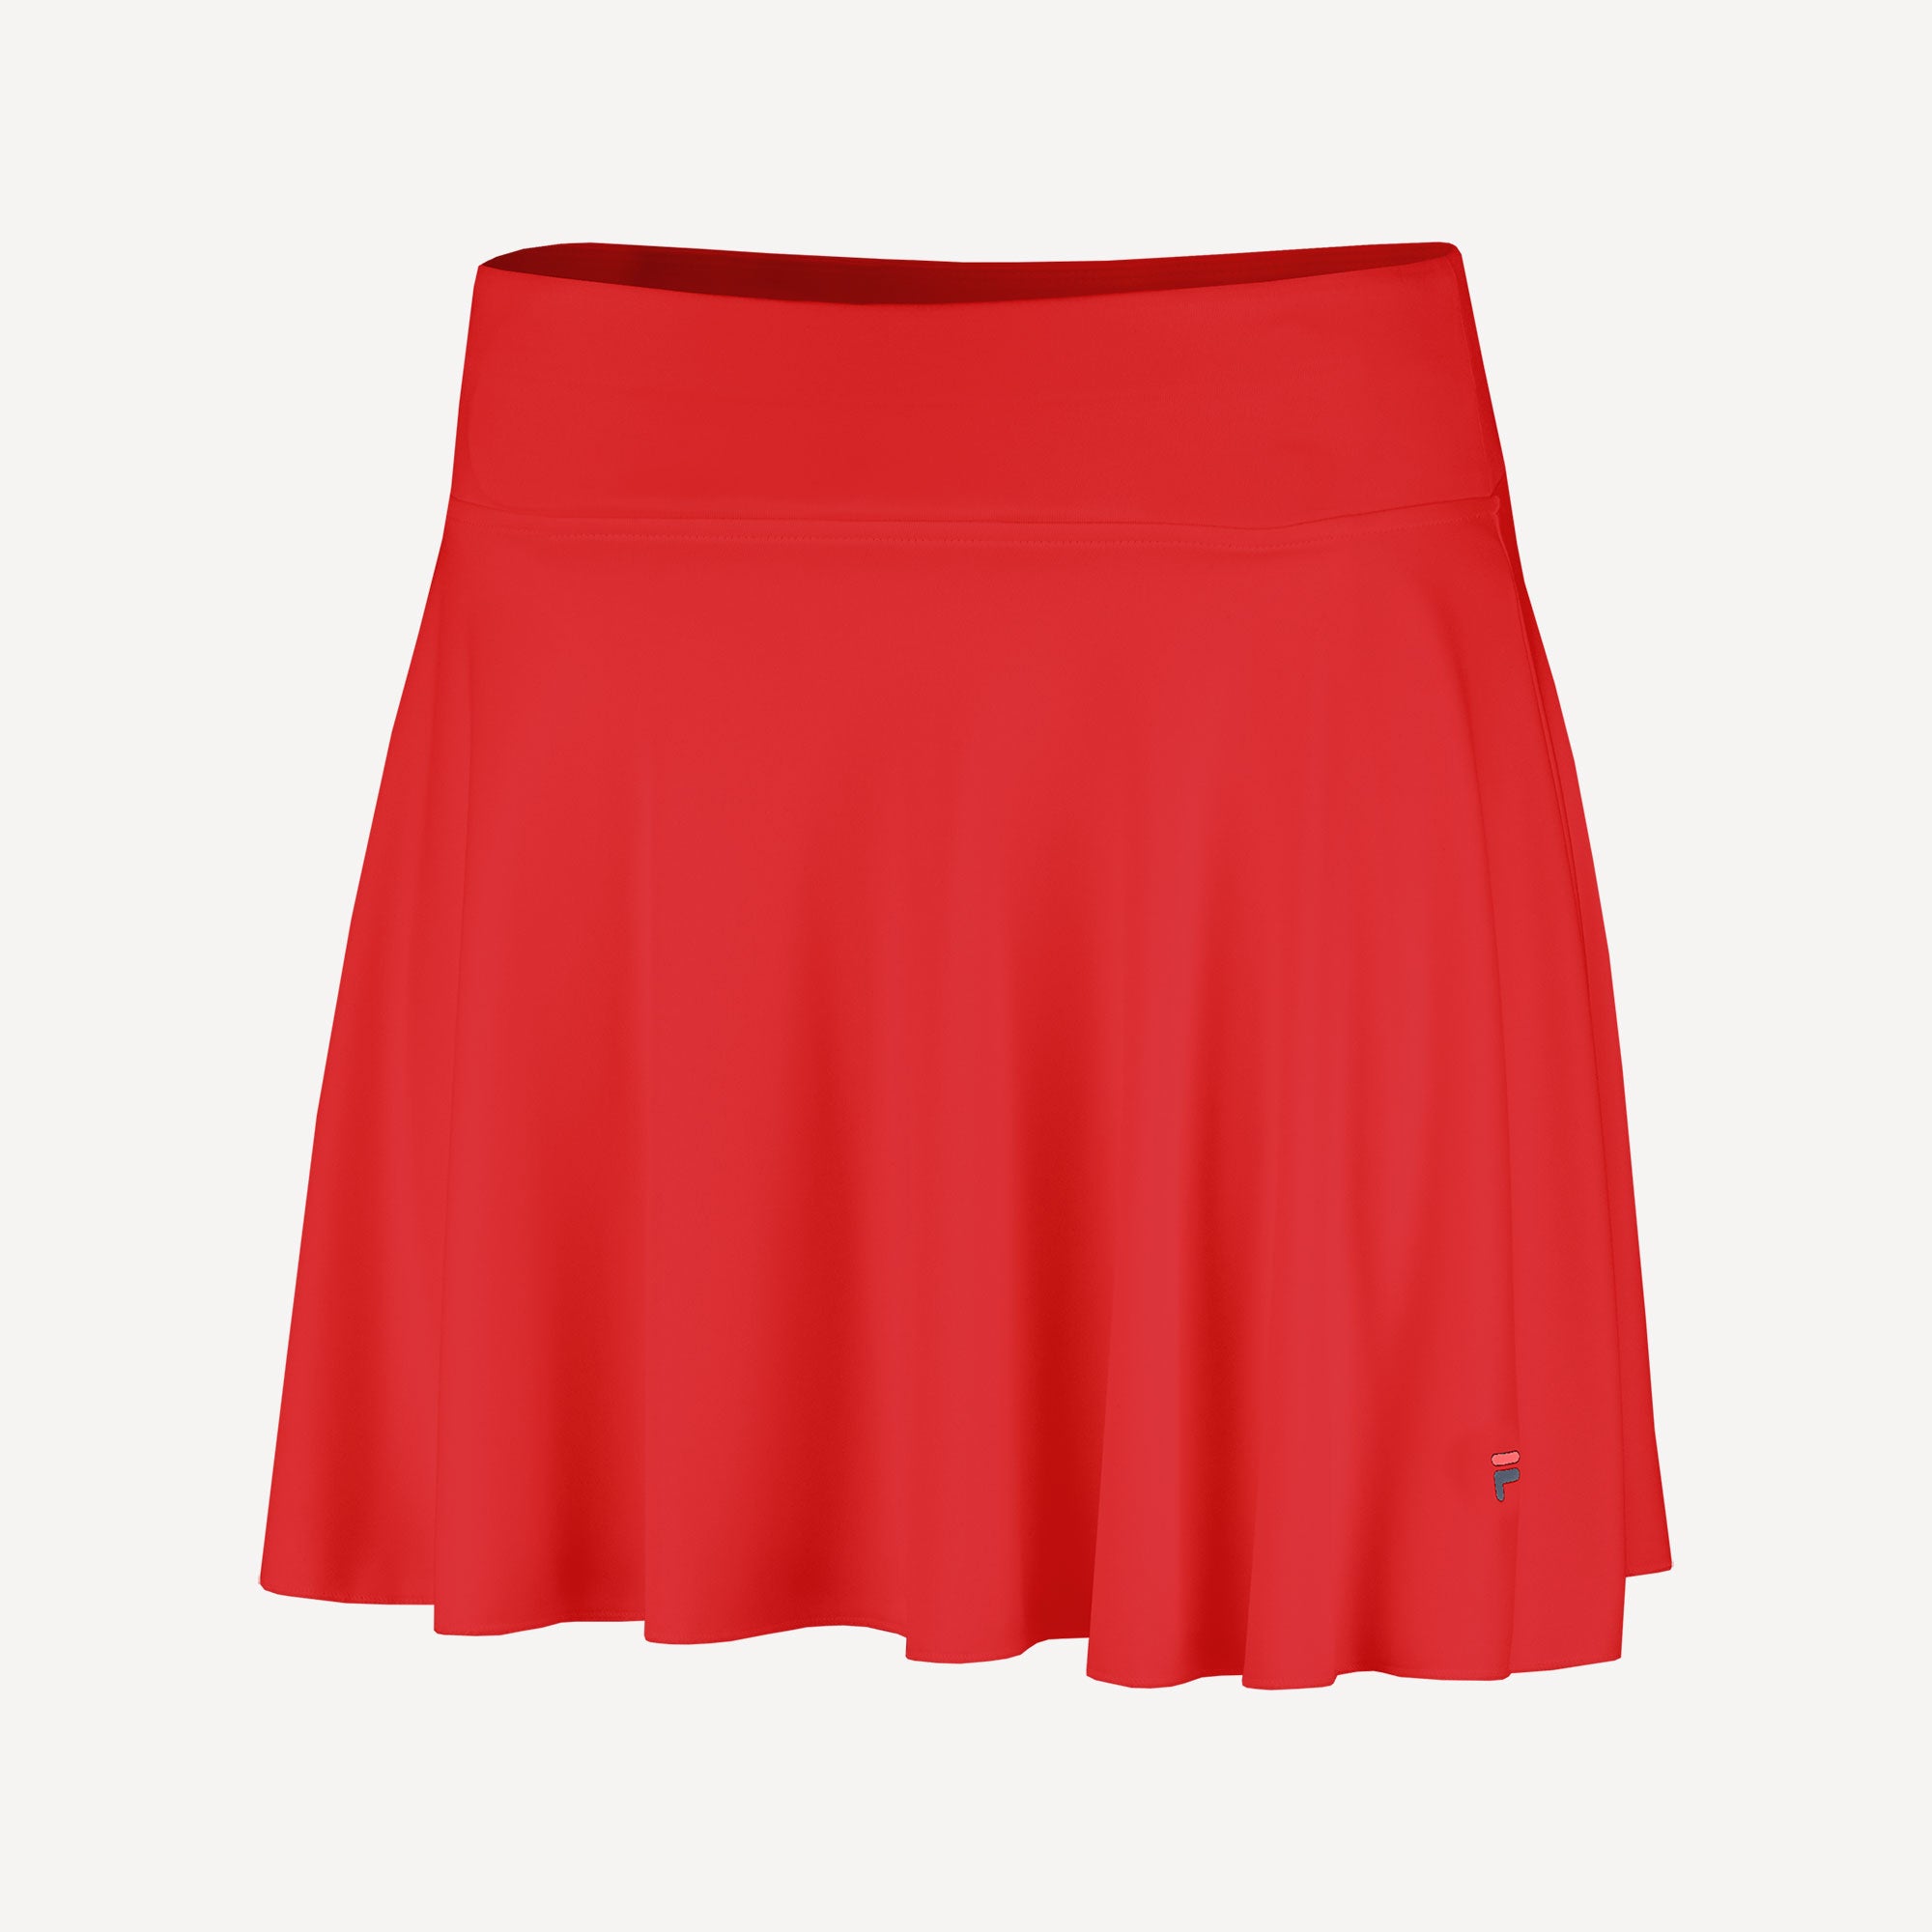 Fila Nicci Women's Tennis Skort - Red (1)